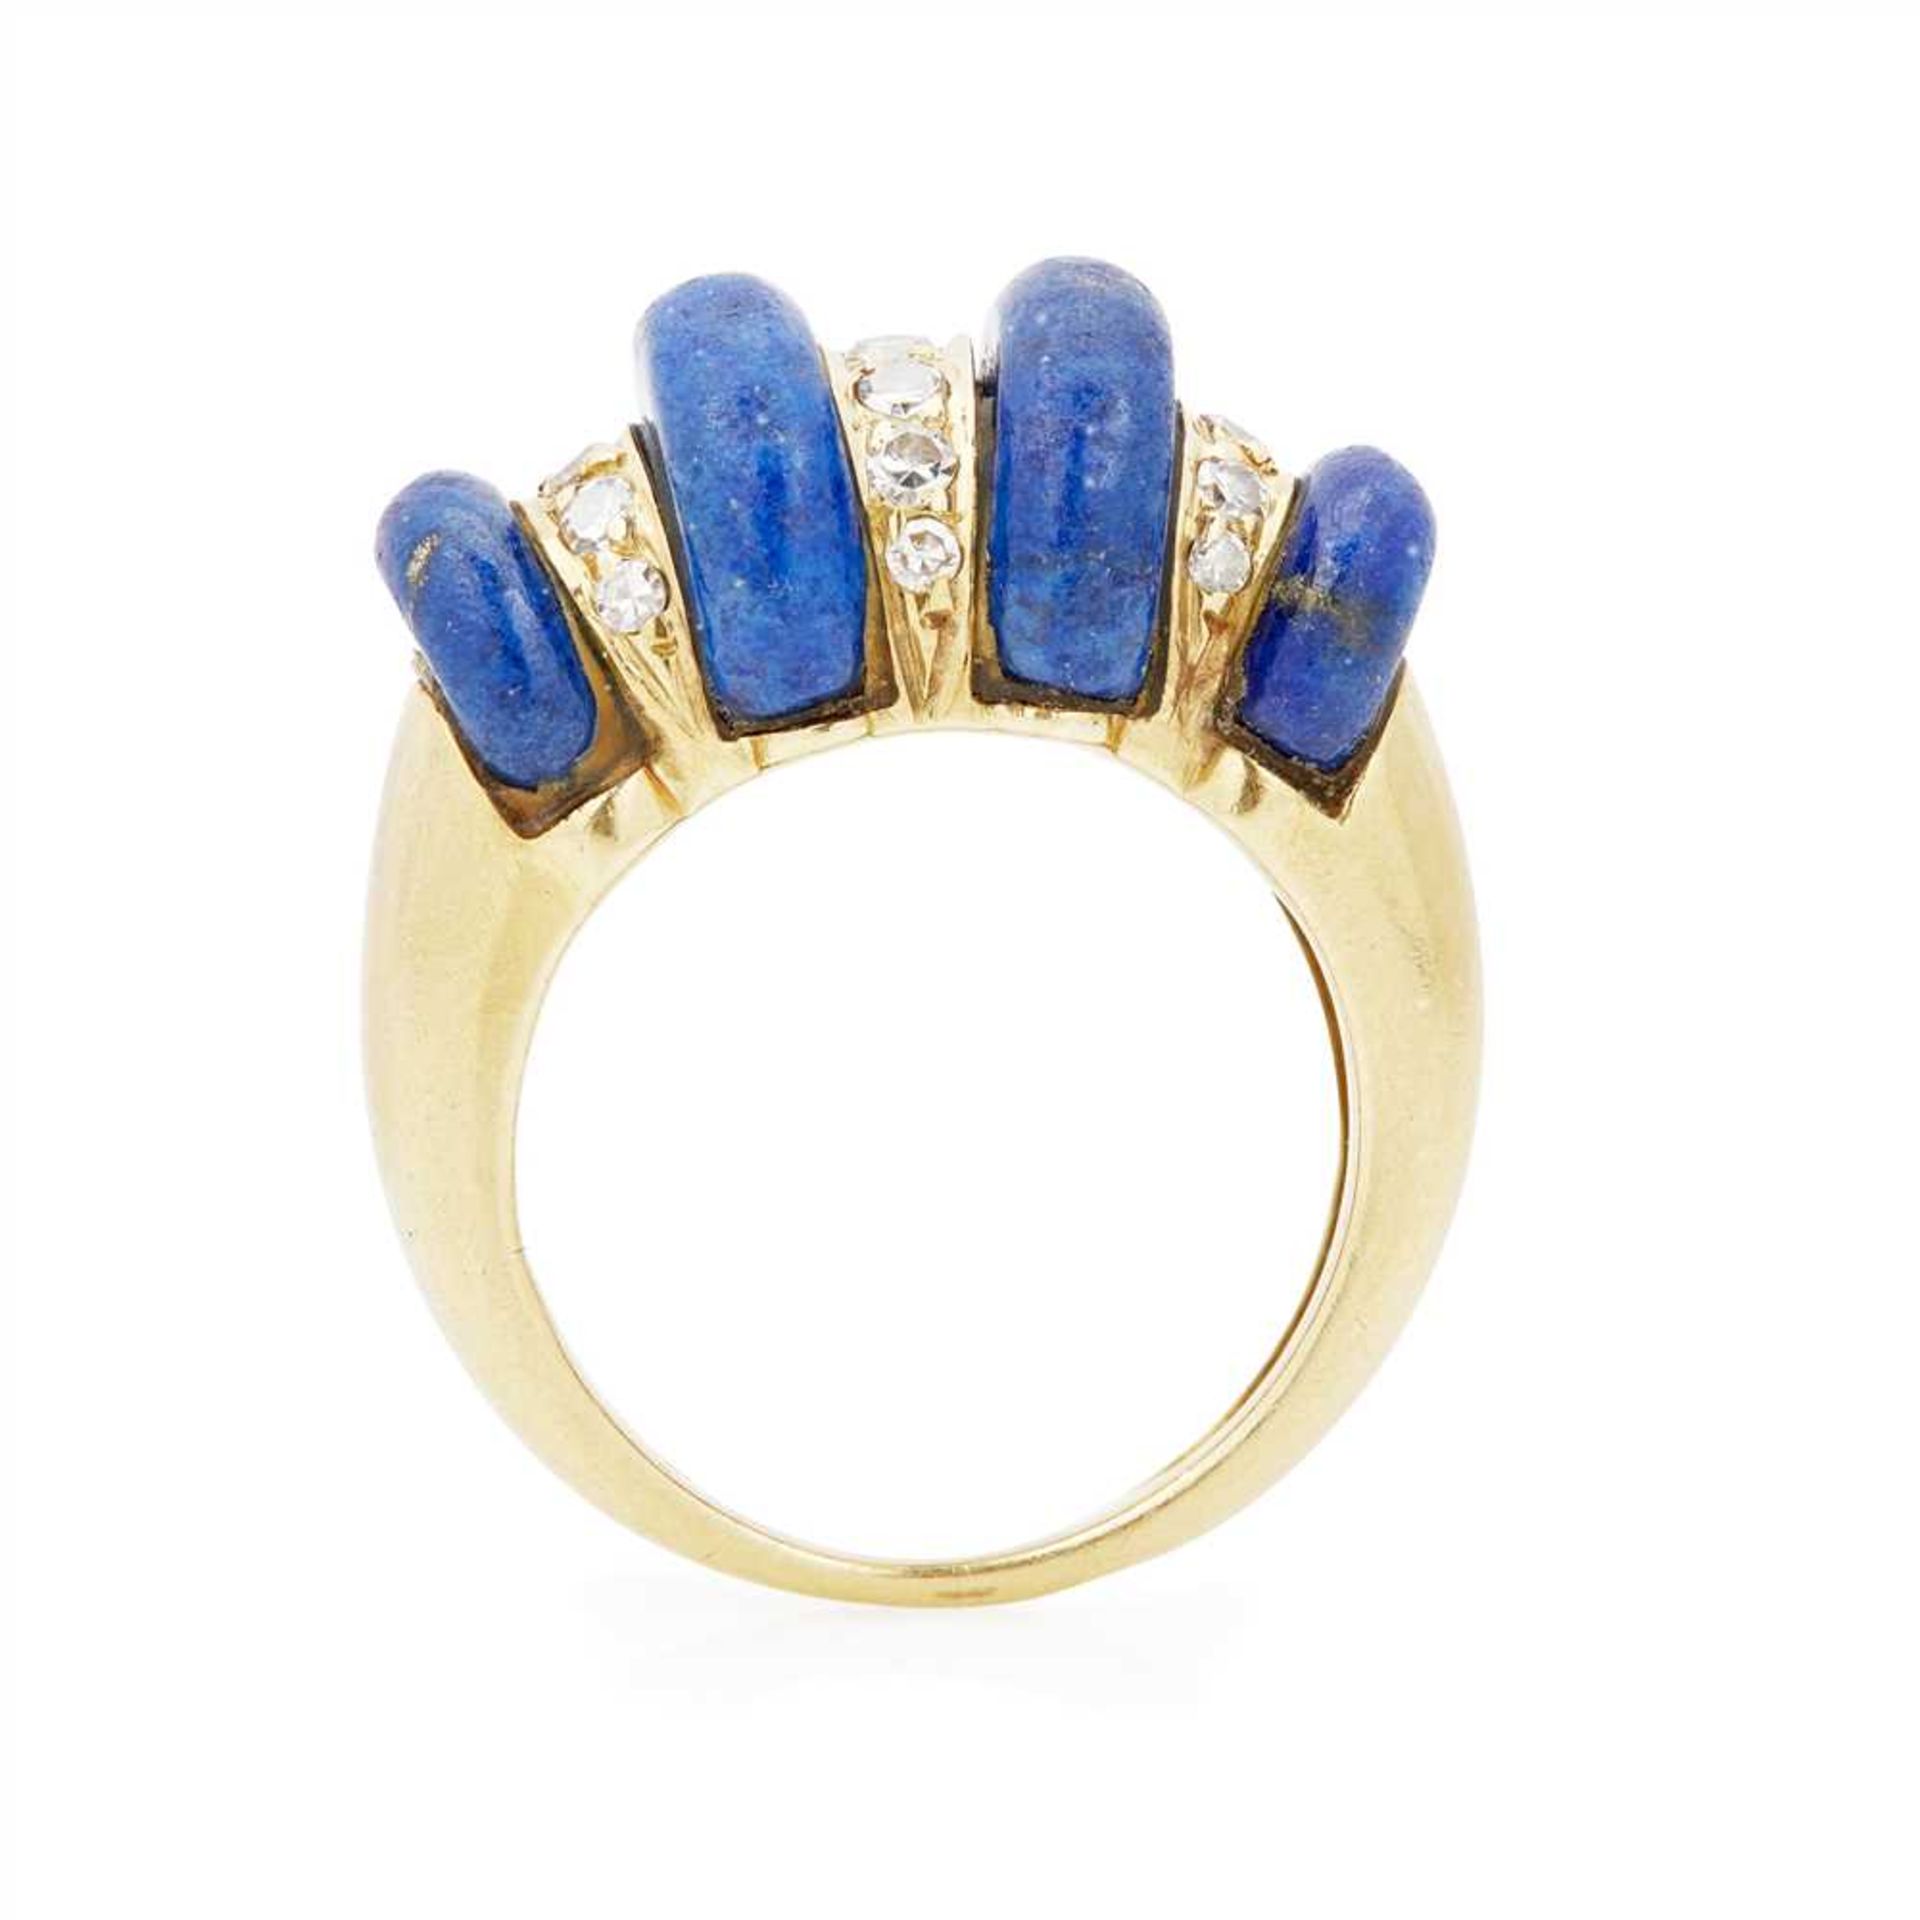 A lapis lazuli and diamond set ring